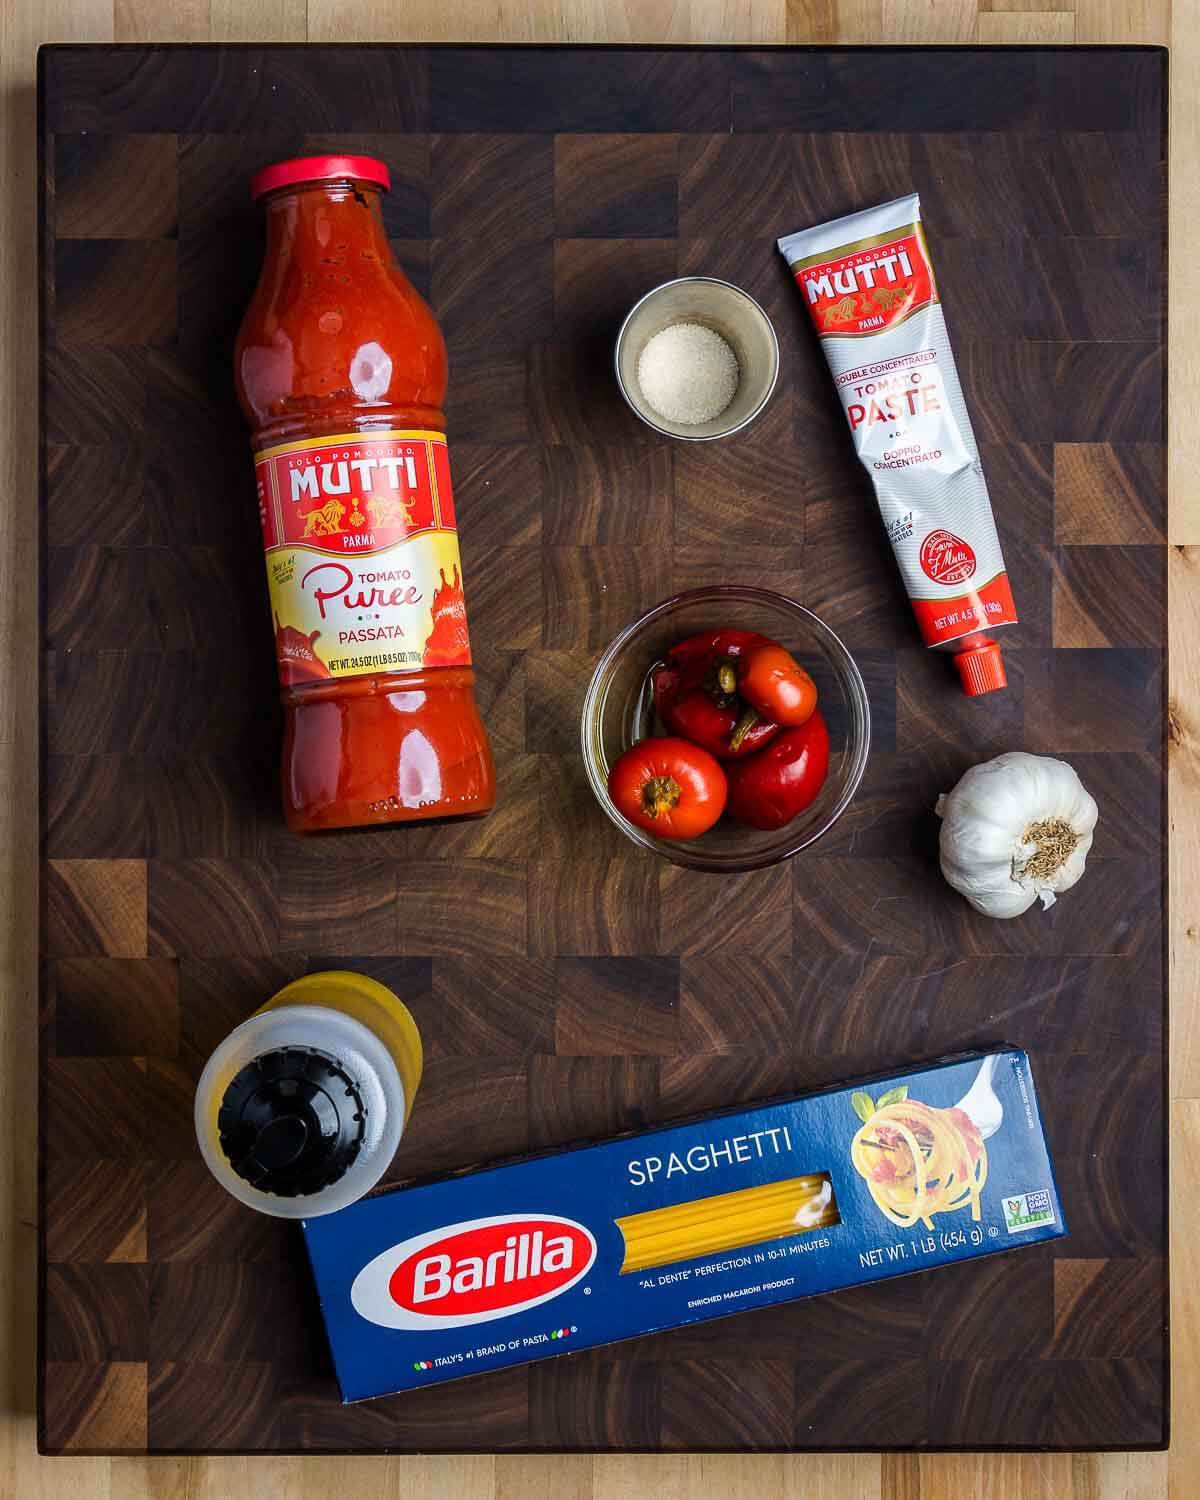 Ingredients shown: passata, sugar, tomato paste, cherry peppers, garlic, olive oil, and spaghetti.